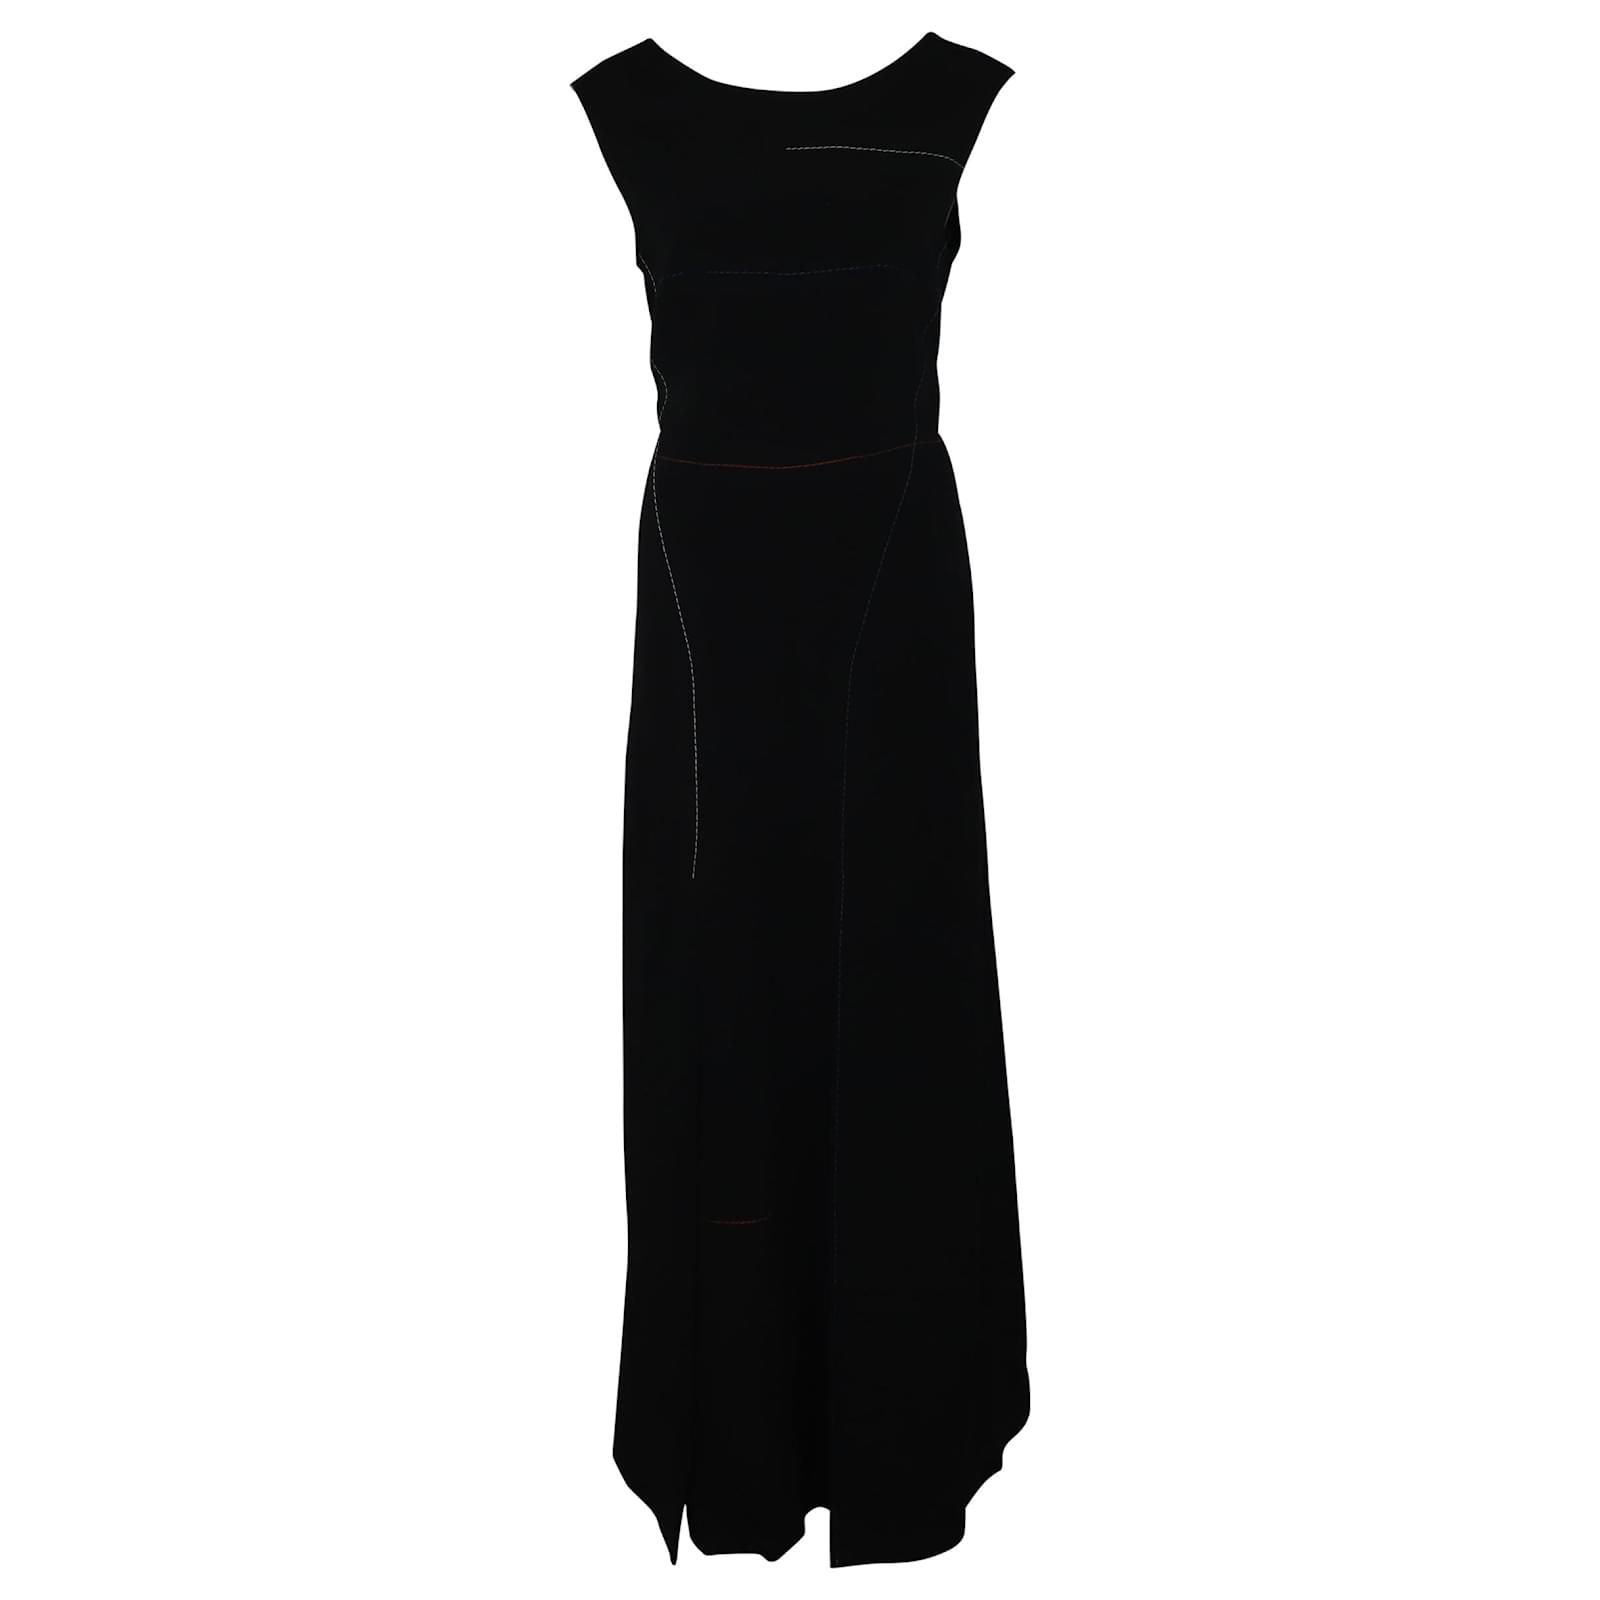 Sportmax Contrast Stitch Backless Long Dress in Black Acetate ref ...